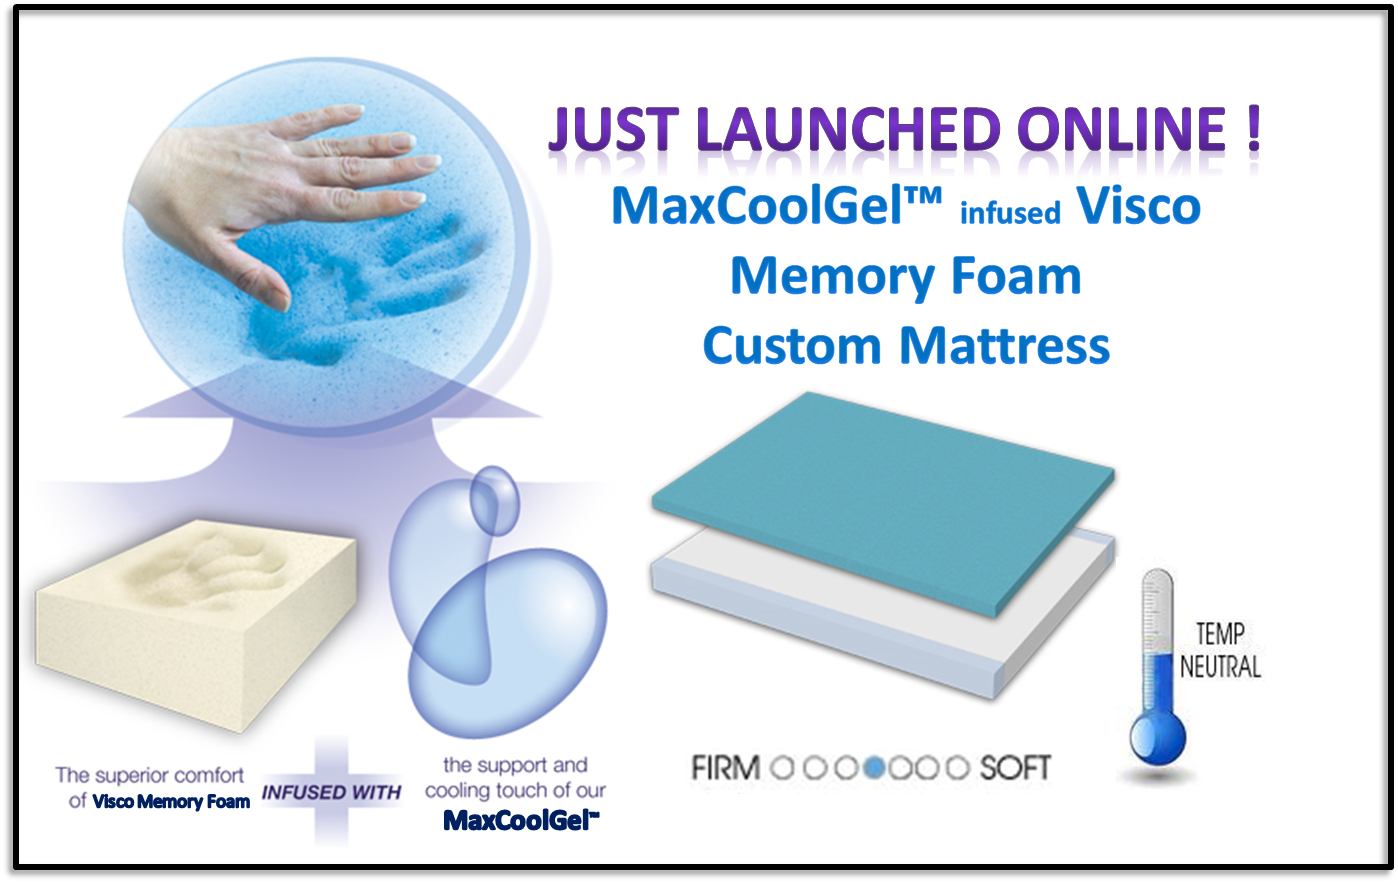 NEW! MaxCoolGel Visco Memory Foam Custom Mattress